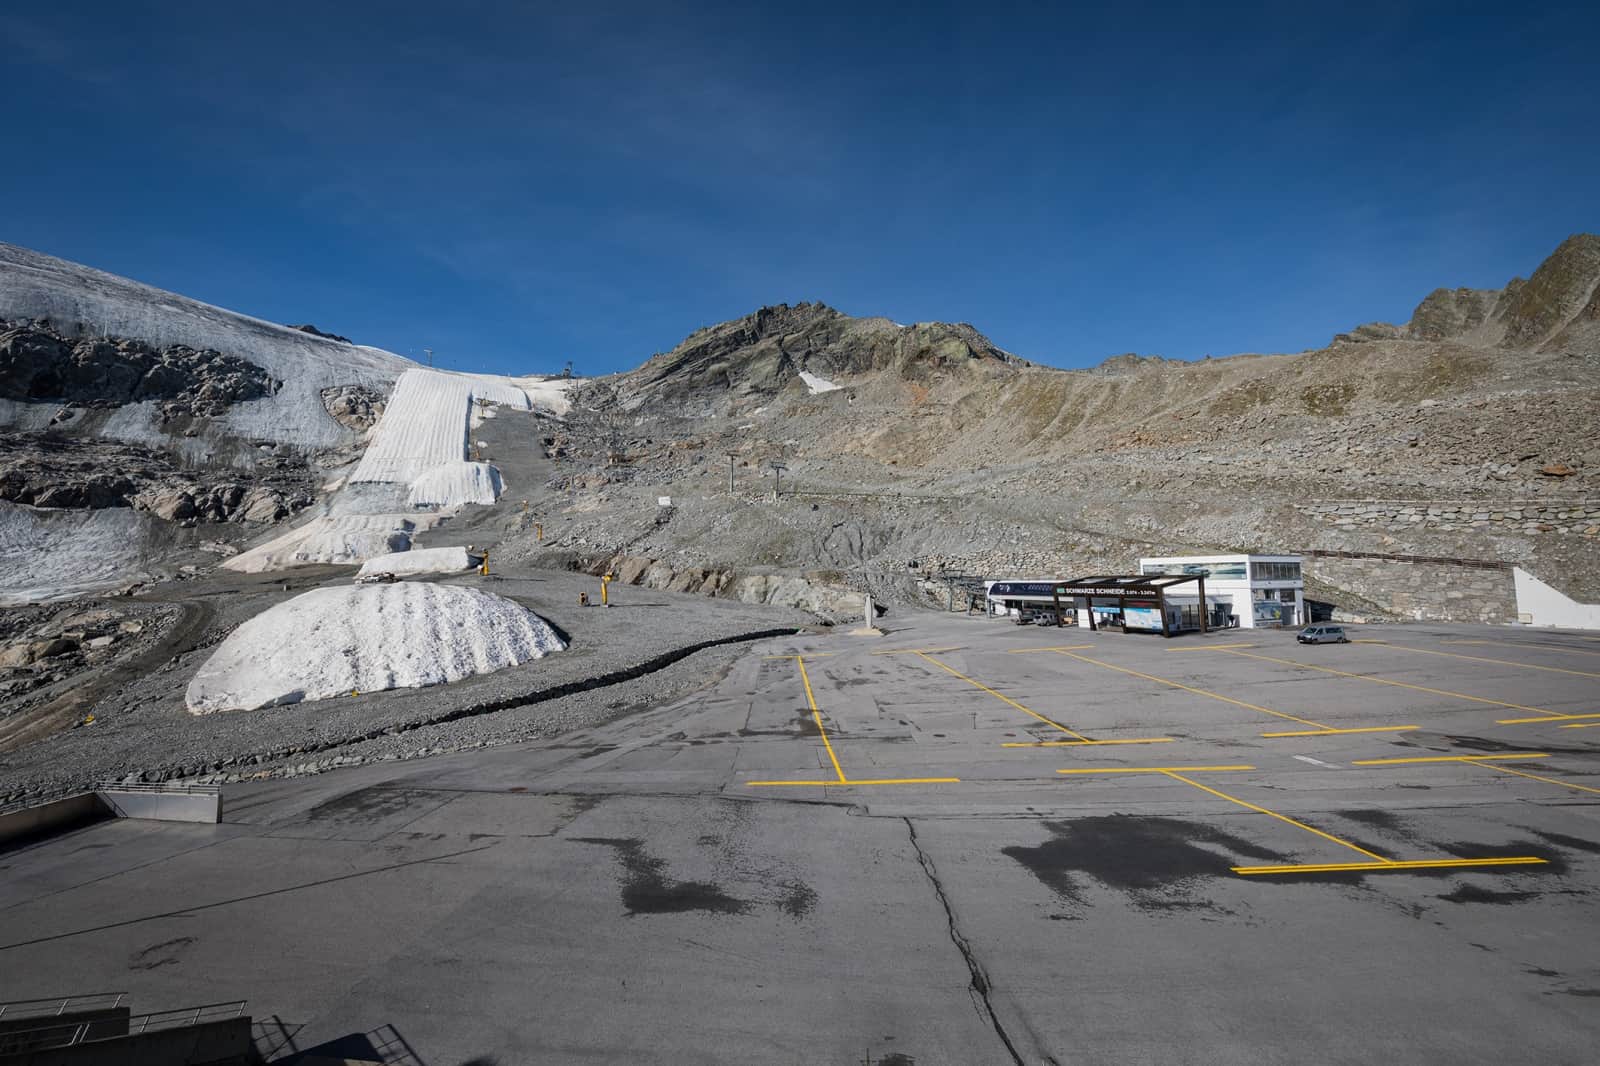  Gletscher Arena Sölden, September 2020, © by © Christian Lendl 